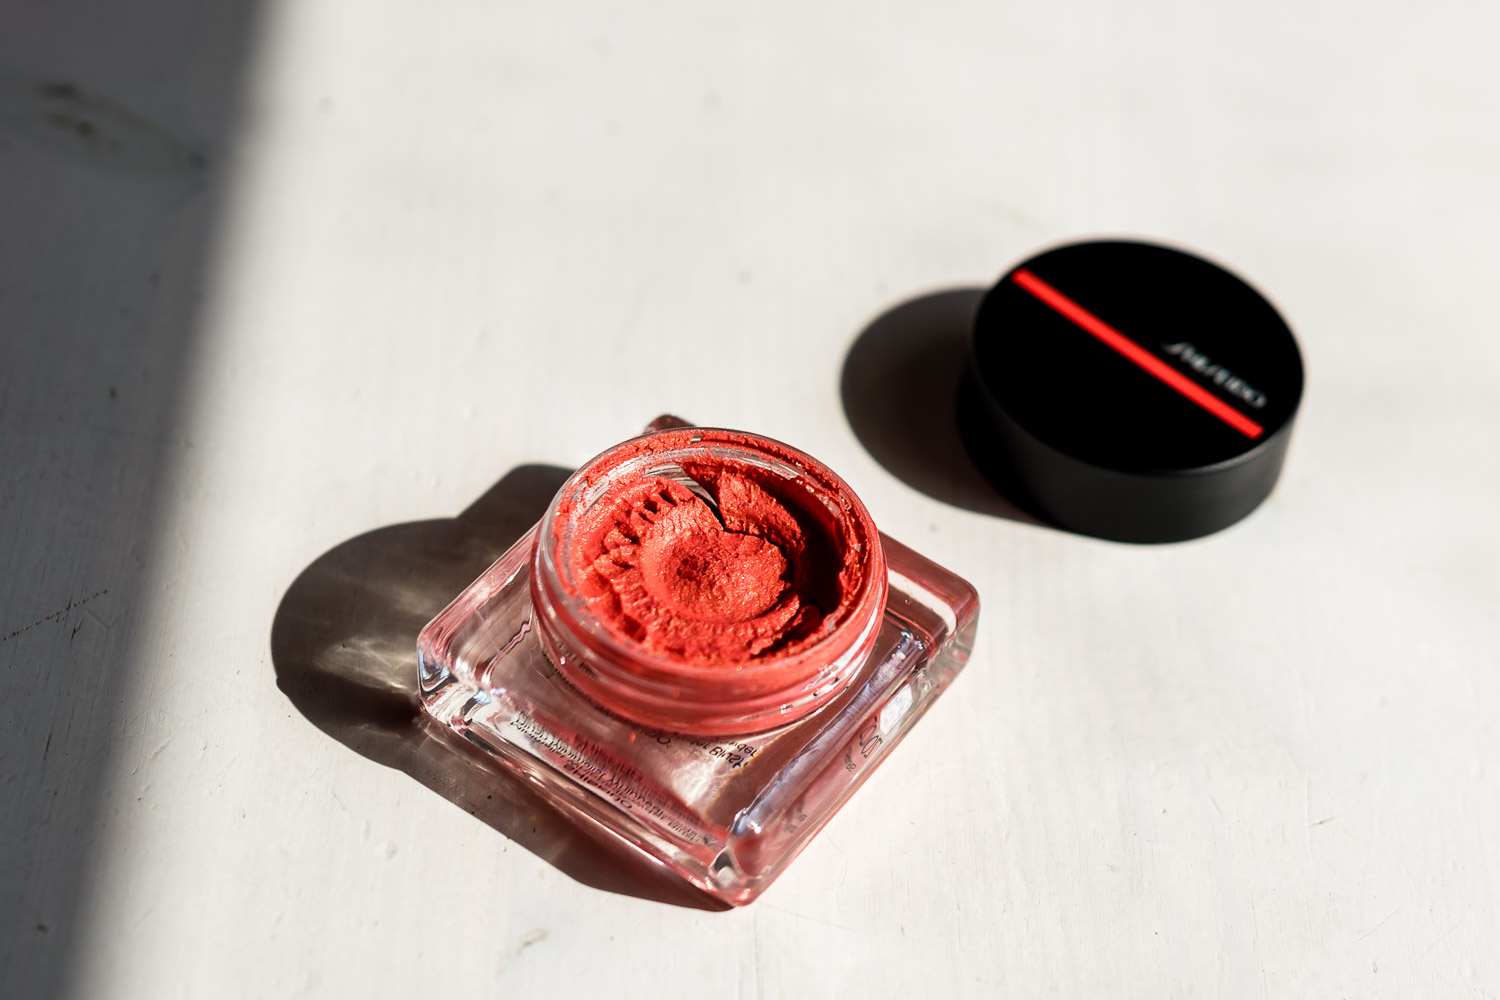 Shiseido Minimalist WhippedPowder Blush